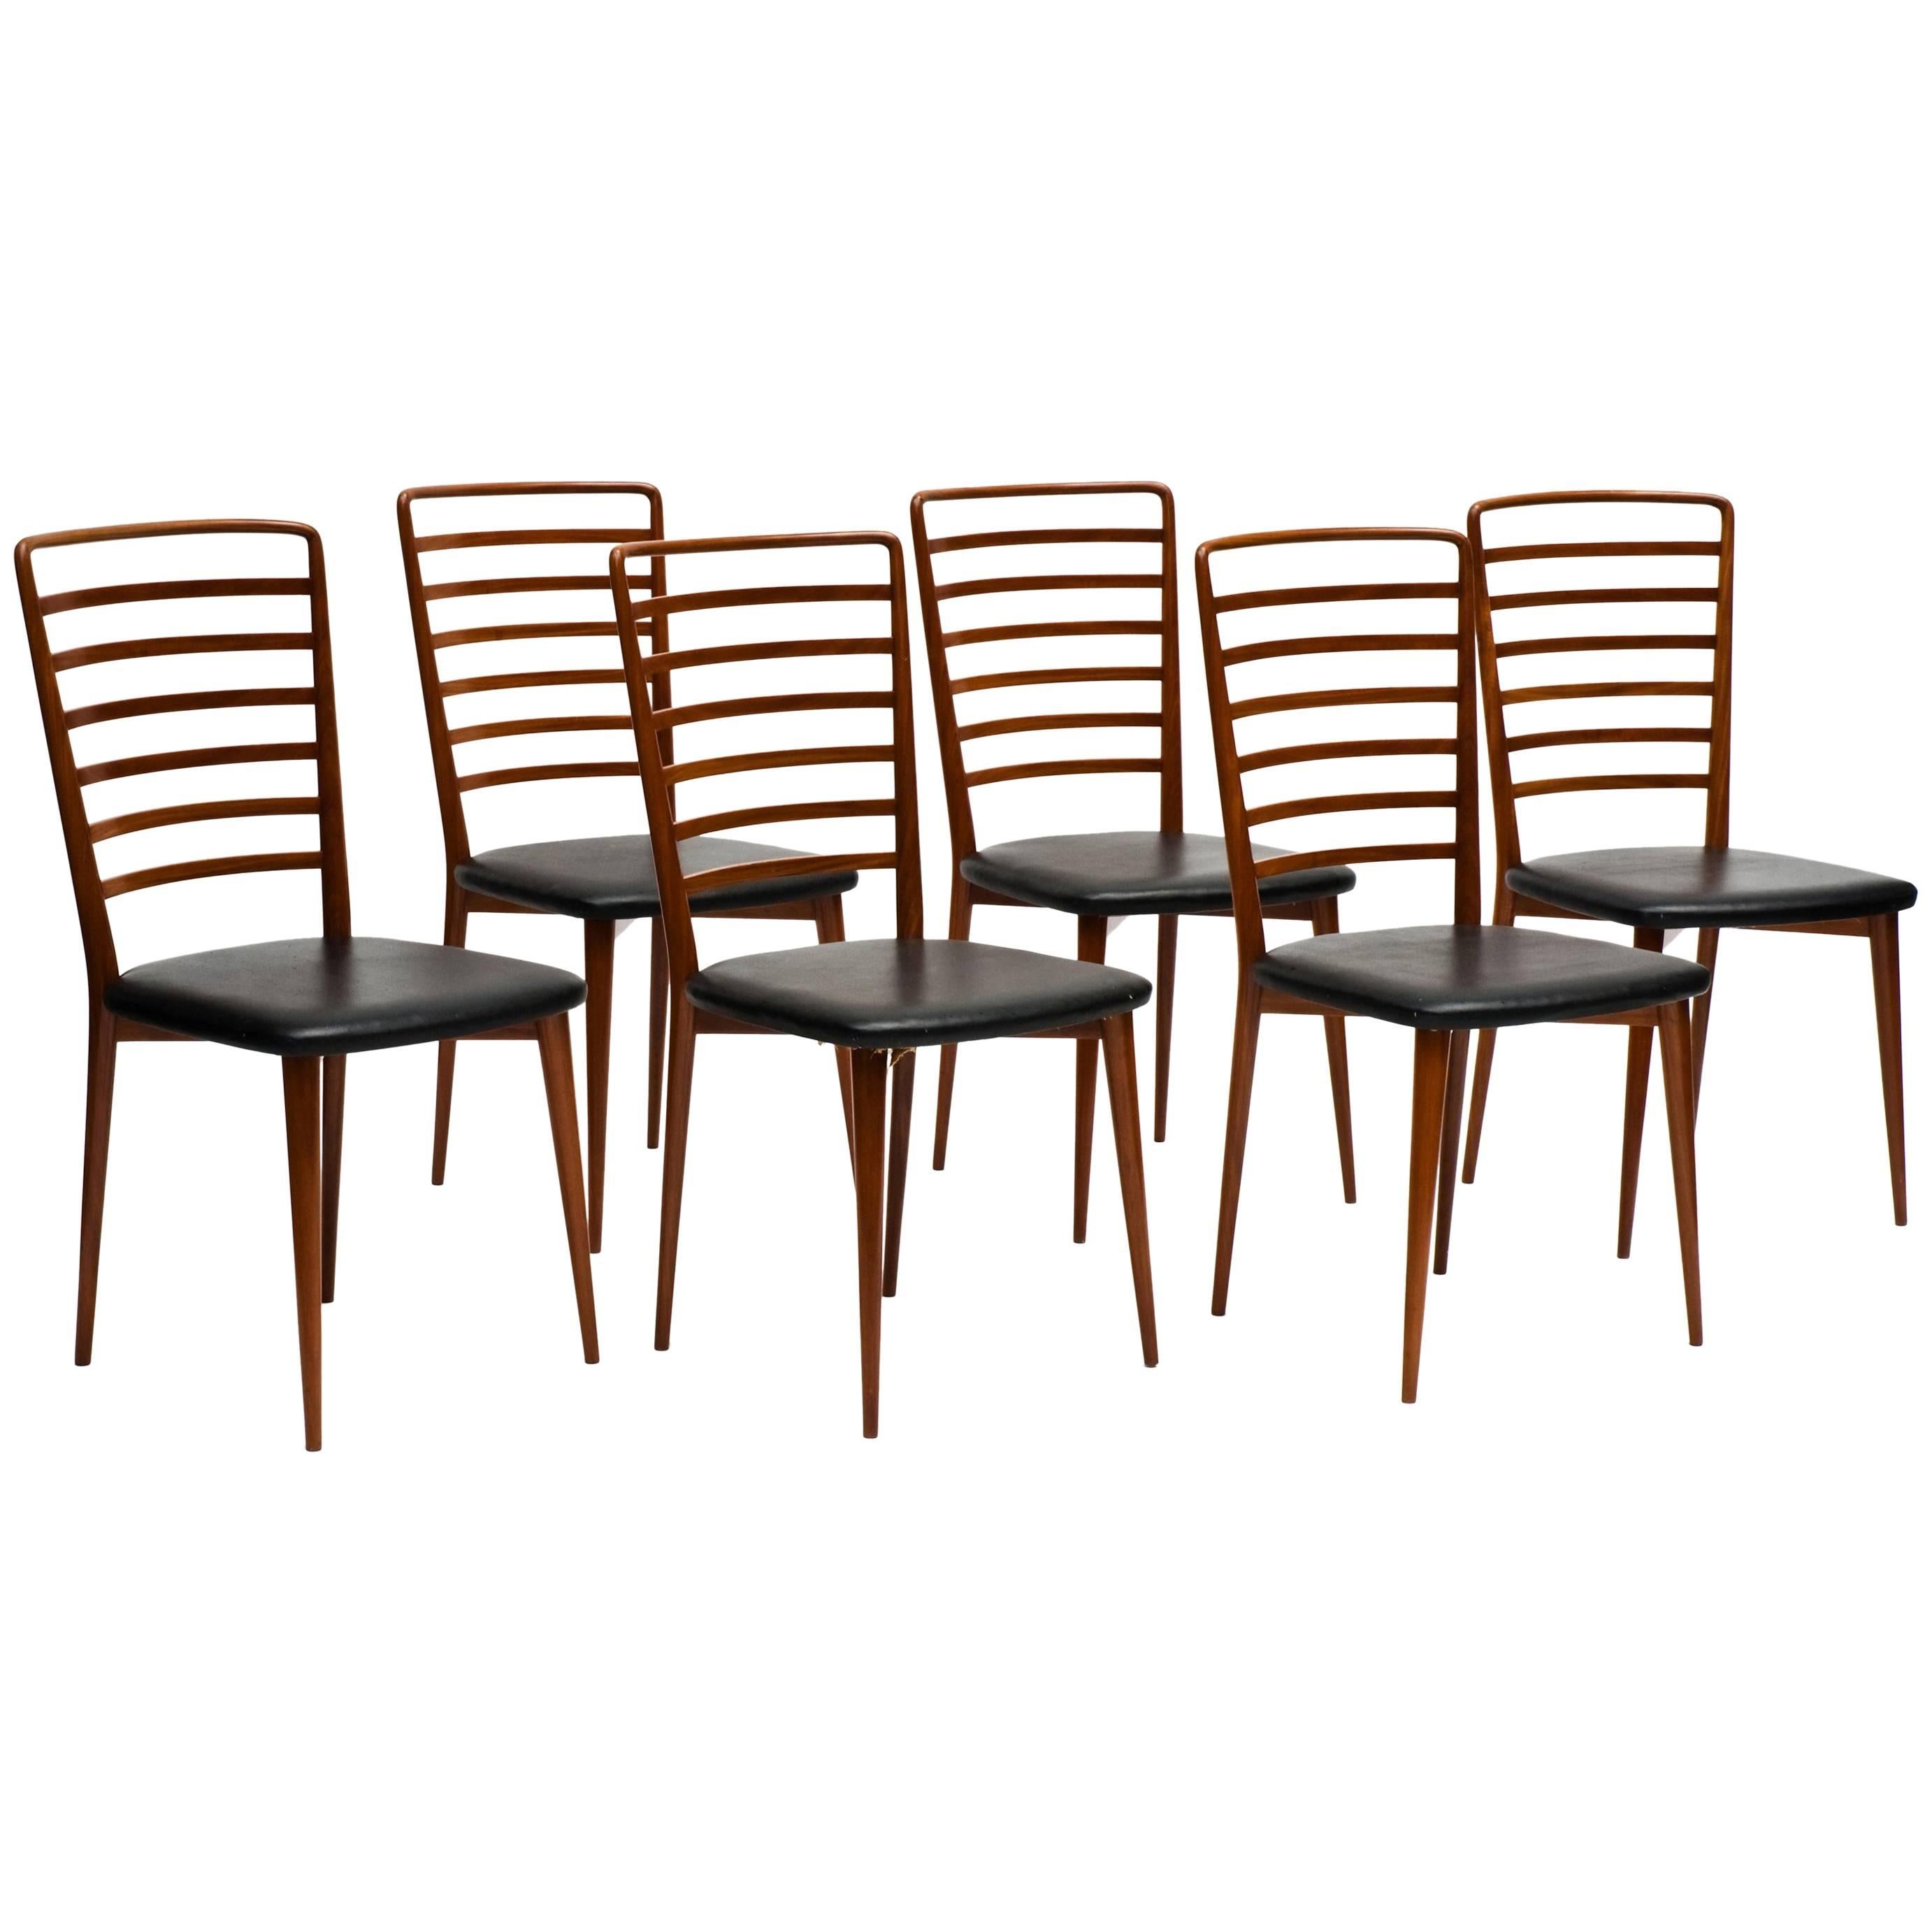 Set of 6 Midcentury brazilian Chairs in brazilian wood by Joaquim Tenreiro, 50s